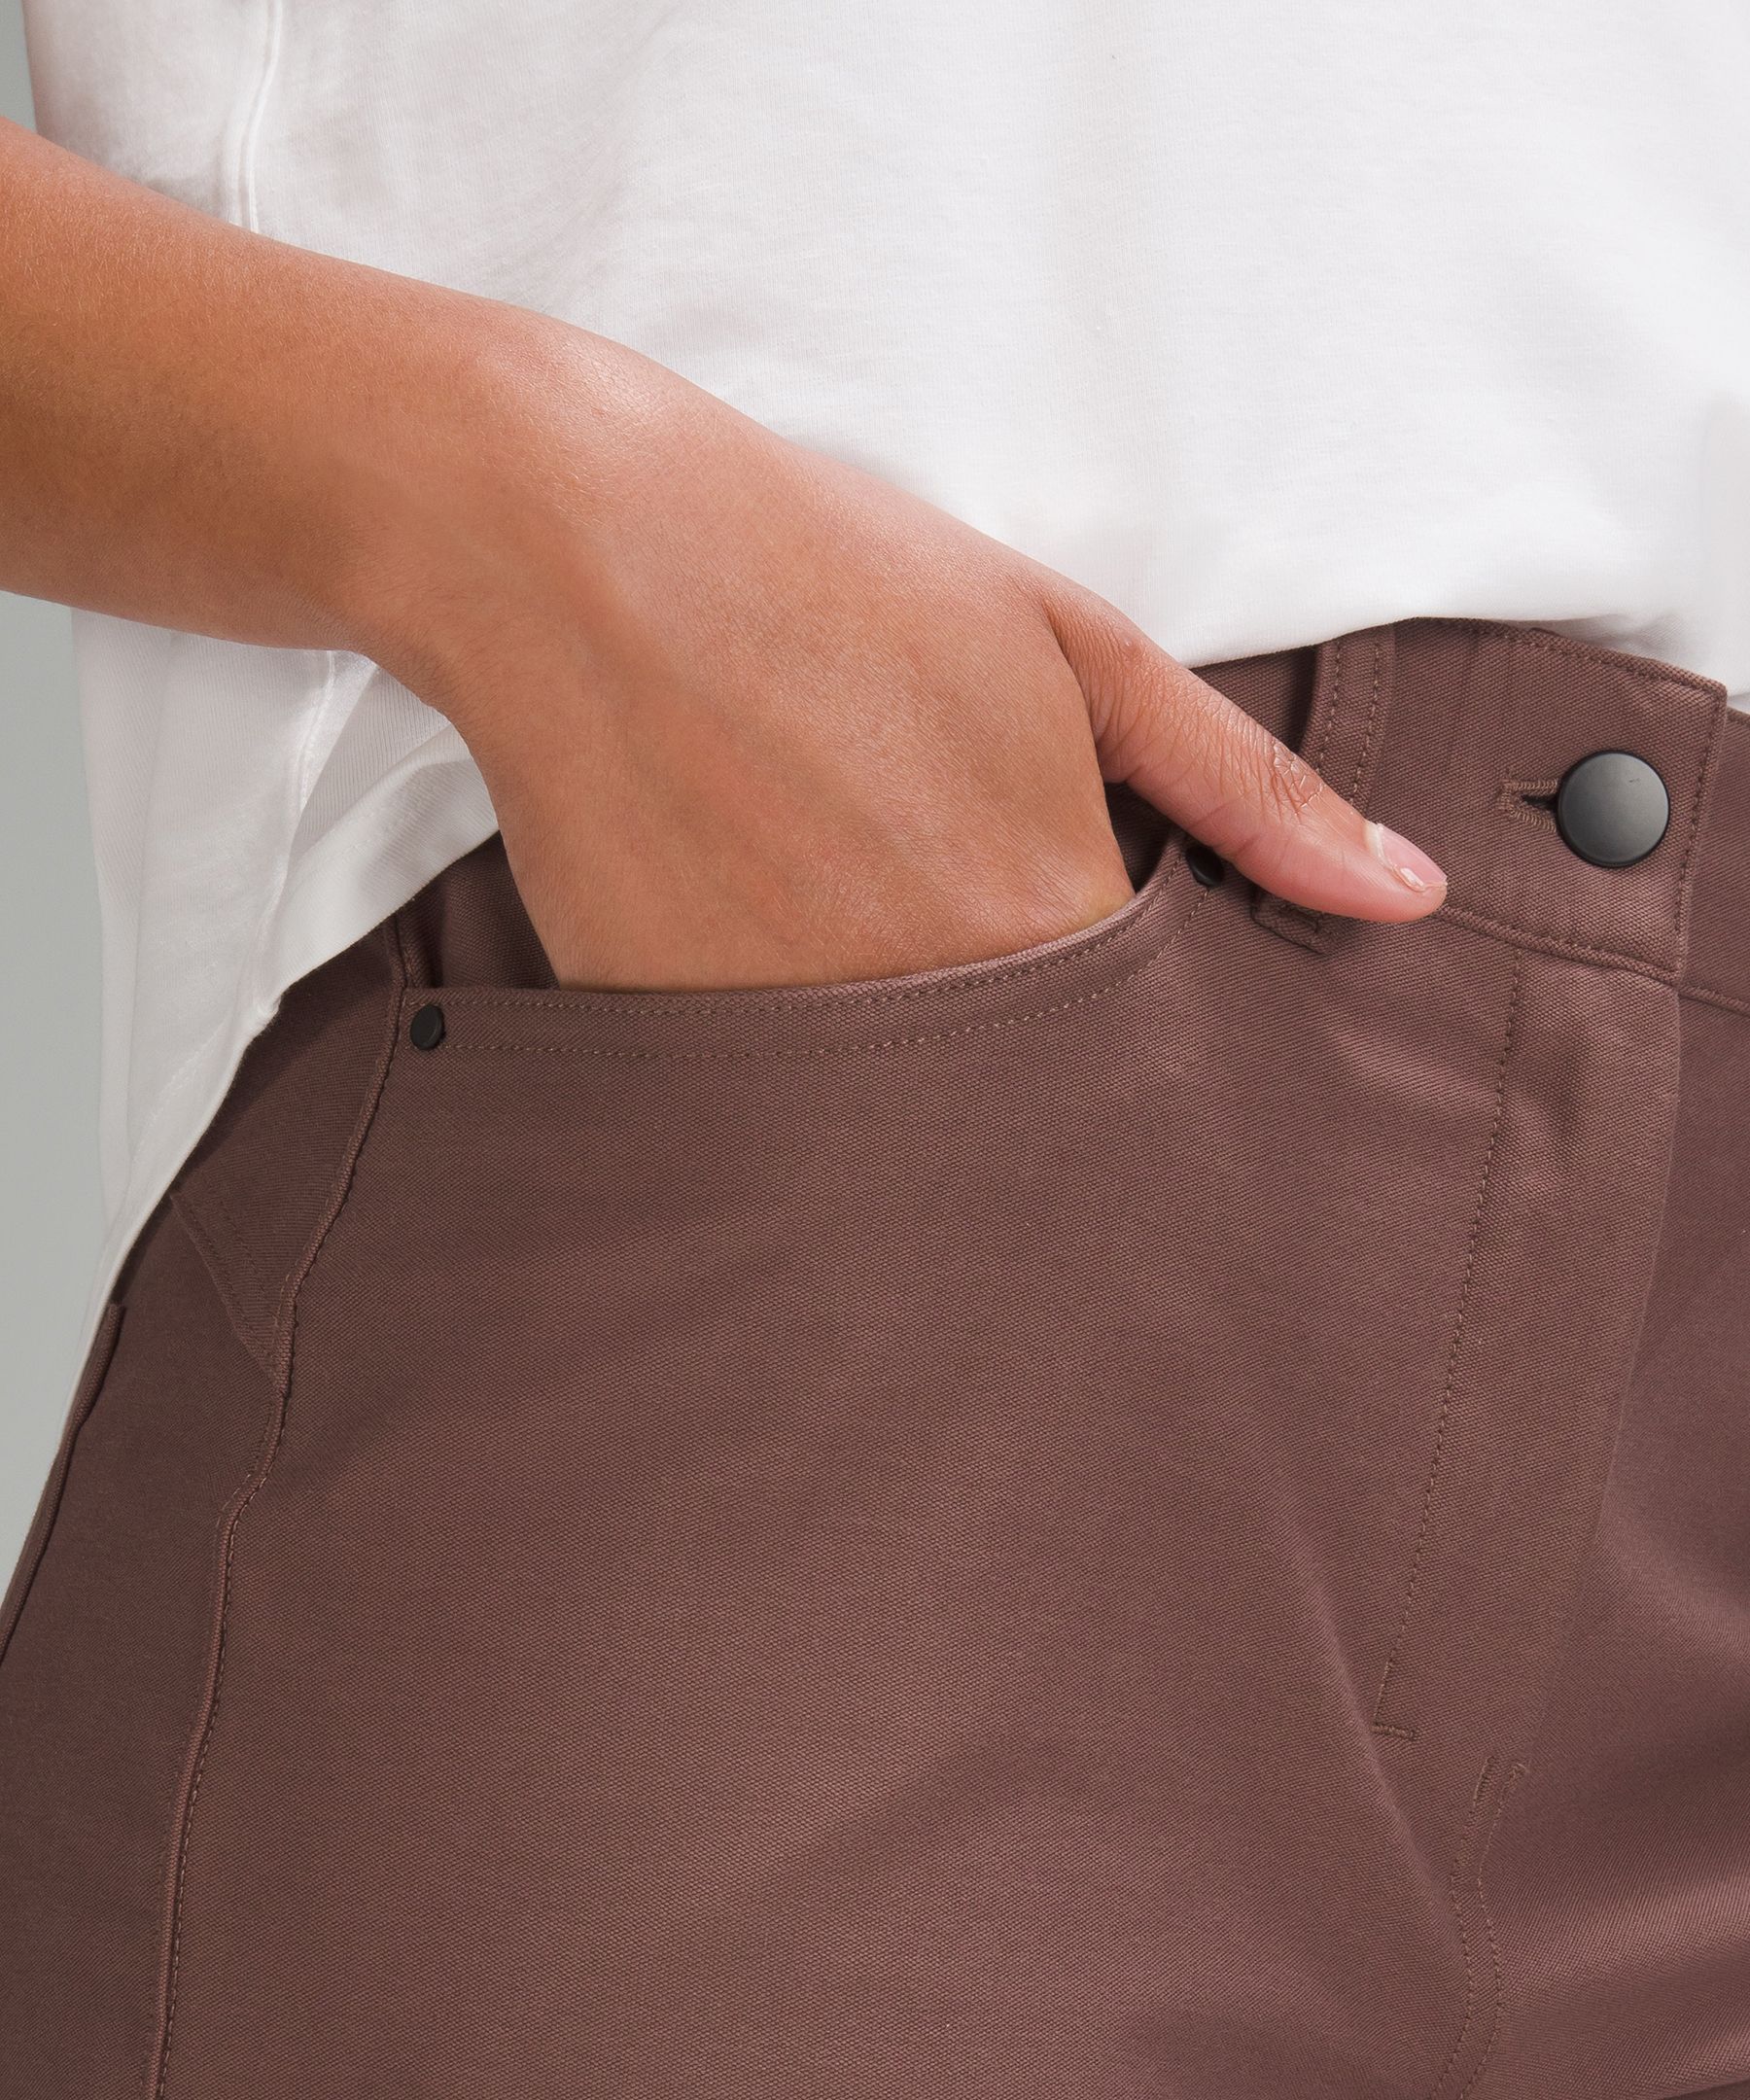 City Sleek 5 Pocket High-Rise Wide-Leg Pant Full Length *Light Utilitech, Women's  Trousers